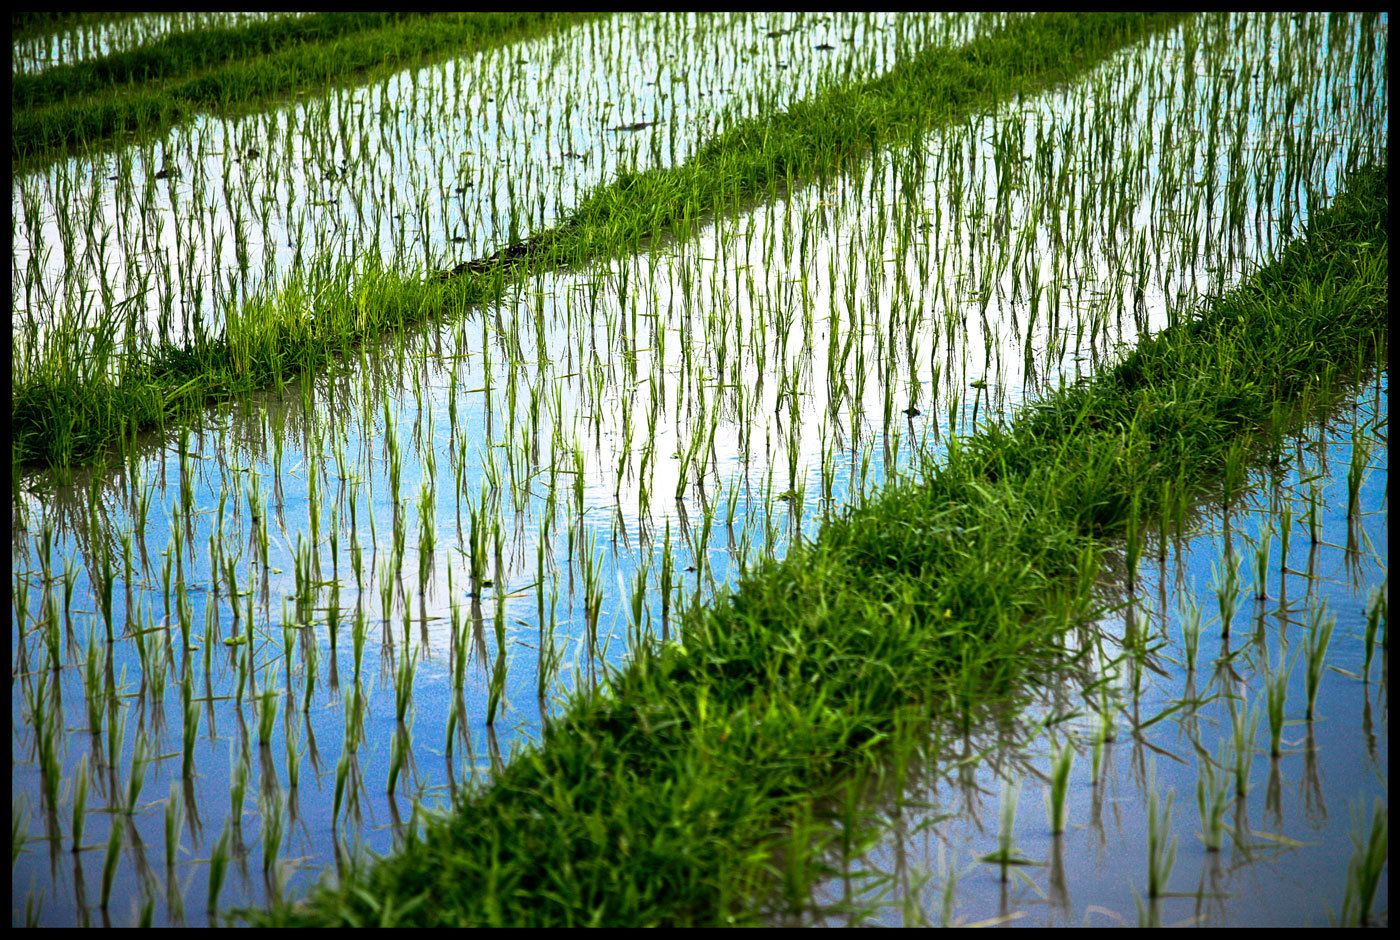 Rice field, Bali